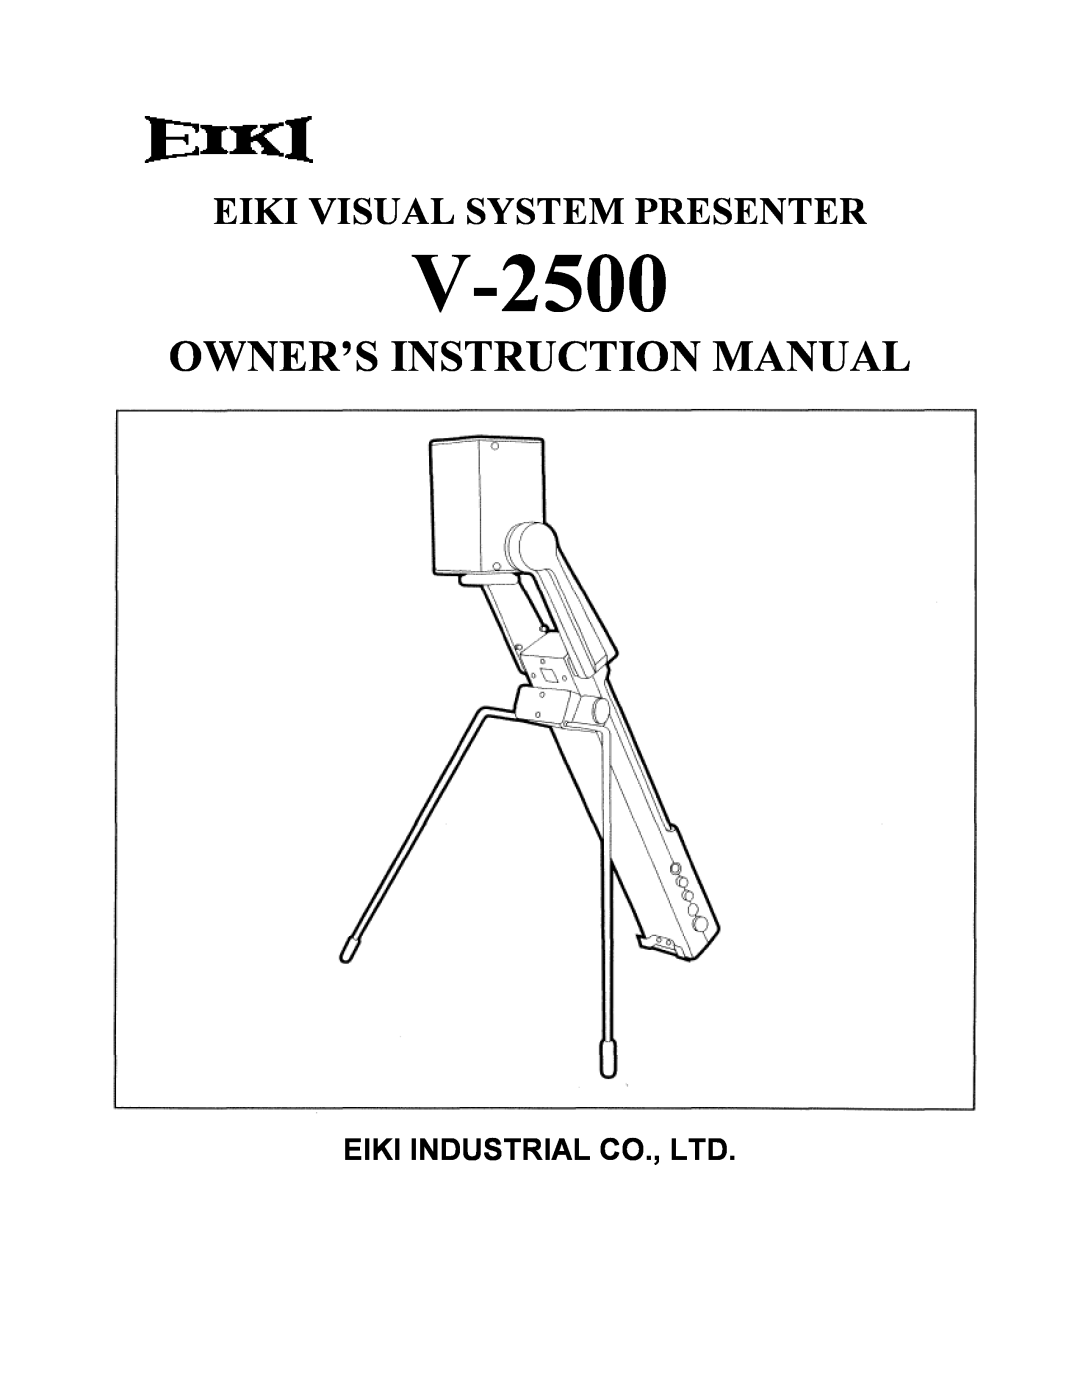 Eiki V-2500 instruction manual Eiki Industrial Co., Ltd, Eiki Visual System Presenter 